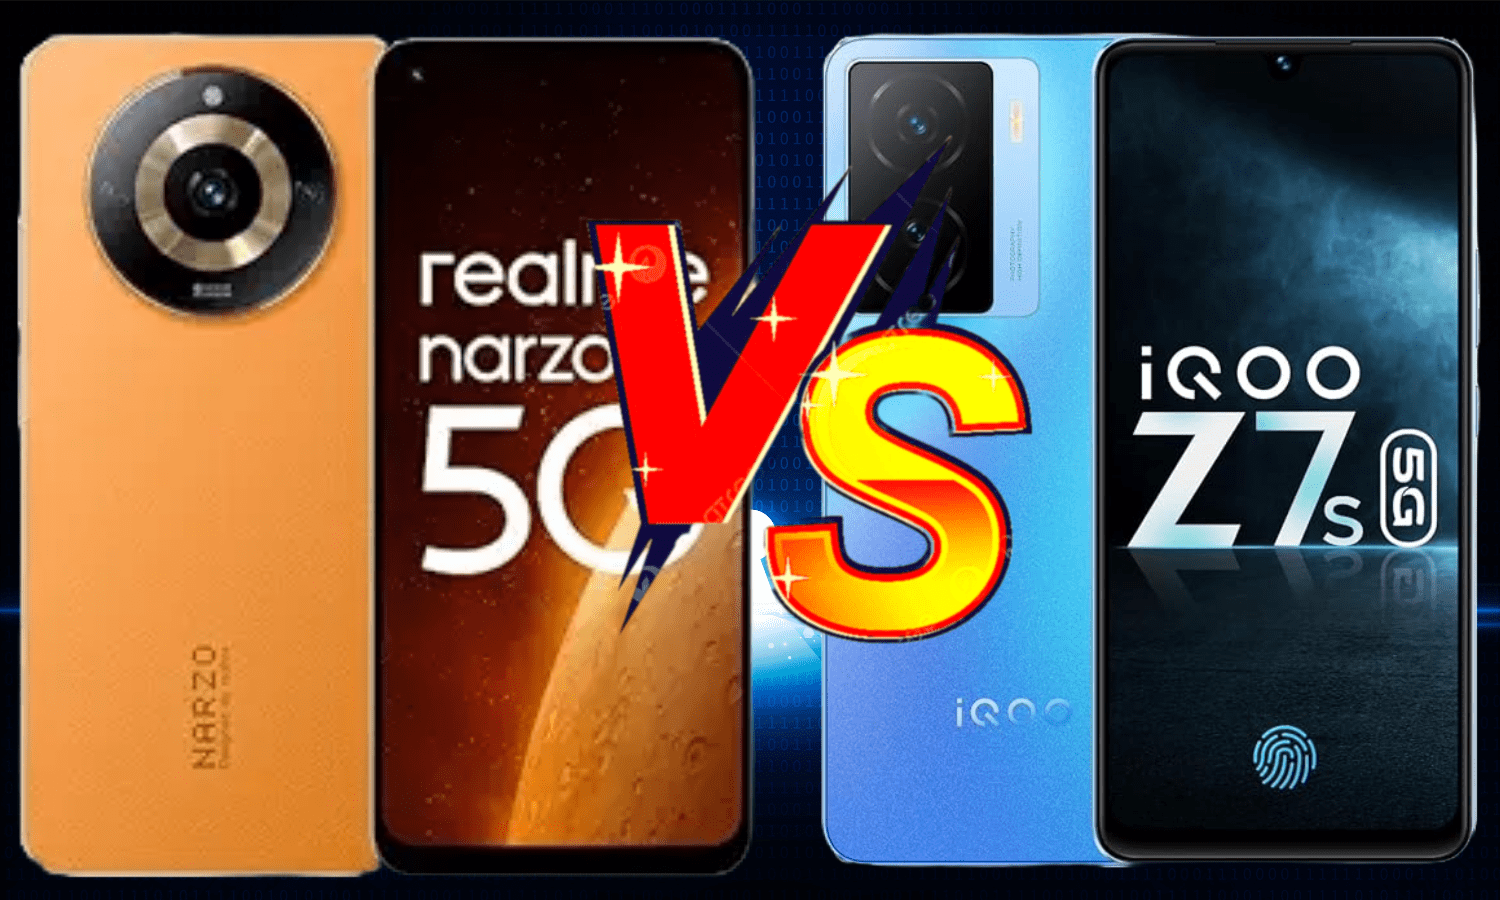 Realme Narzo 60 5G vs. iQoo Z7s 5G: Picking the Right Phone